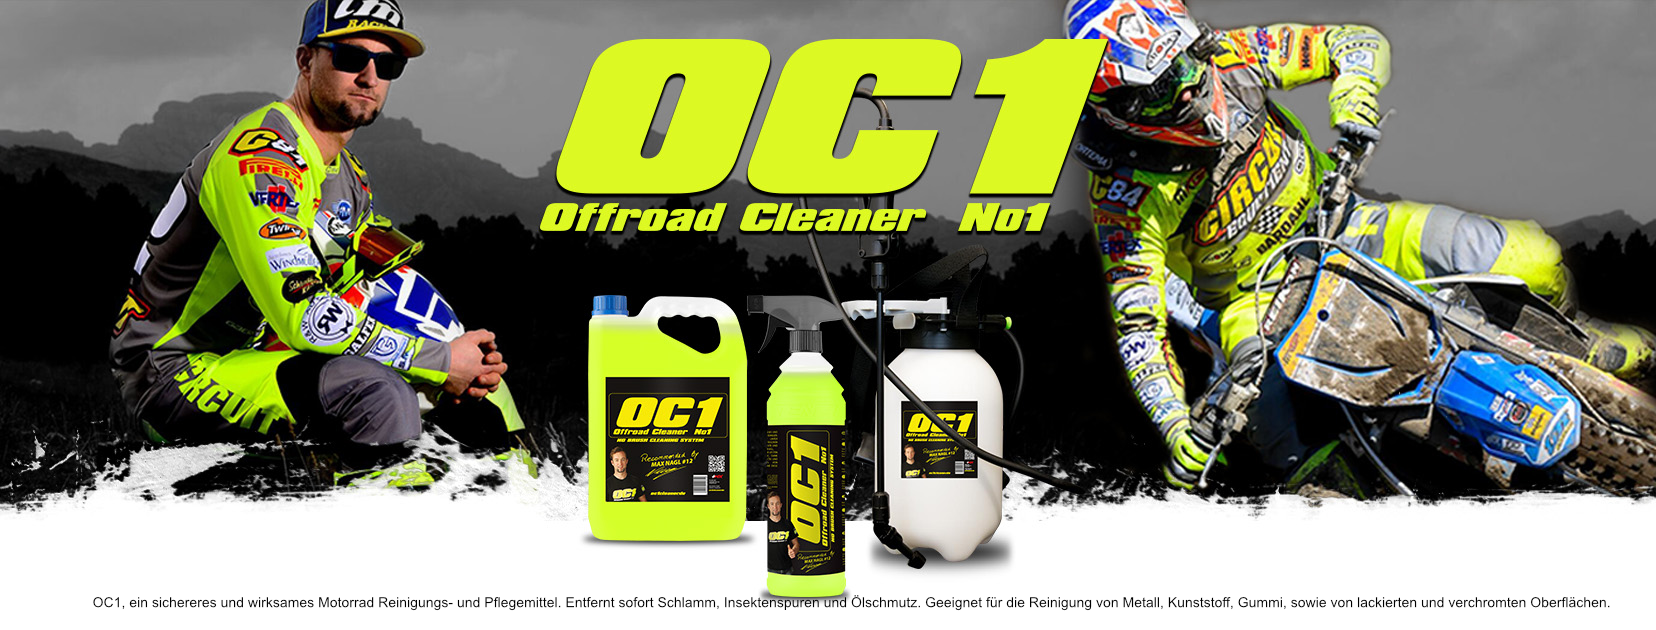 OC1  Cleander